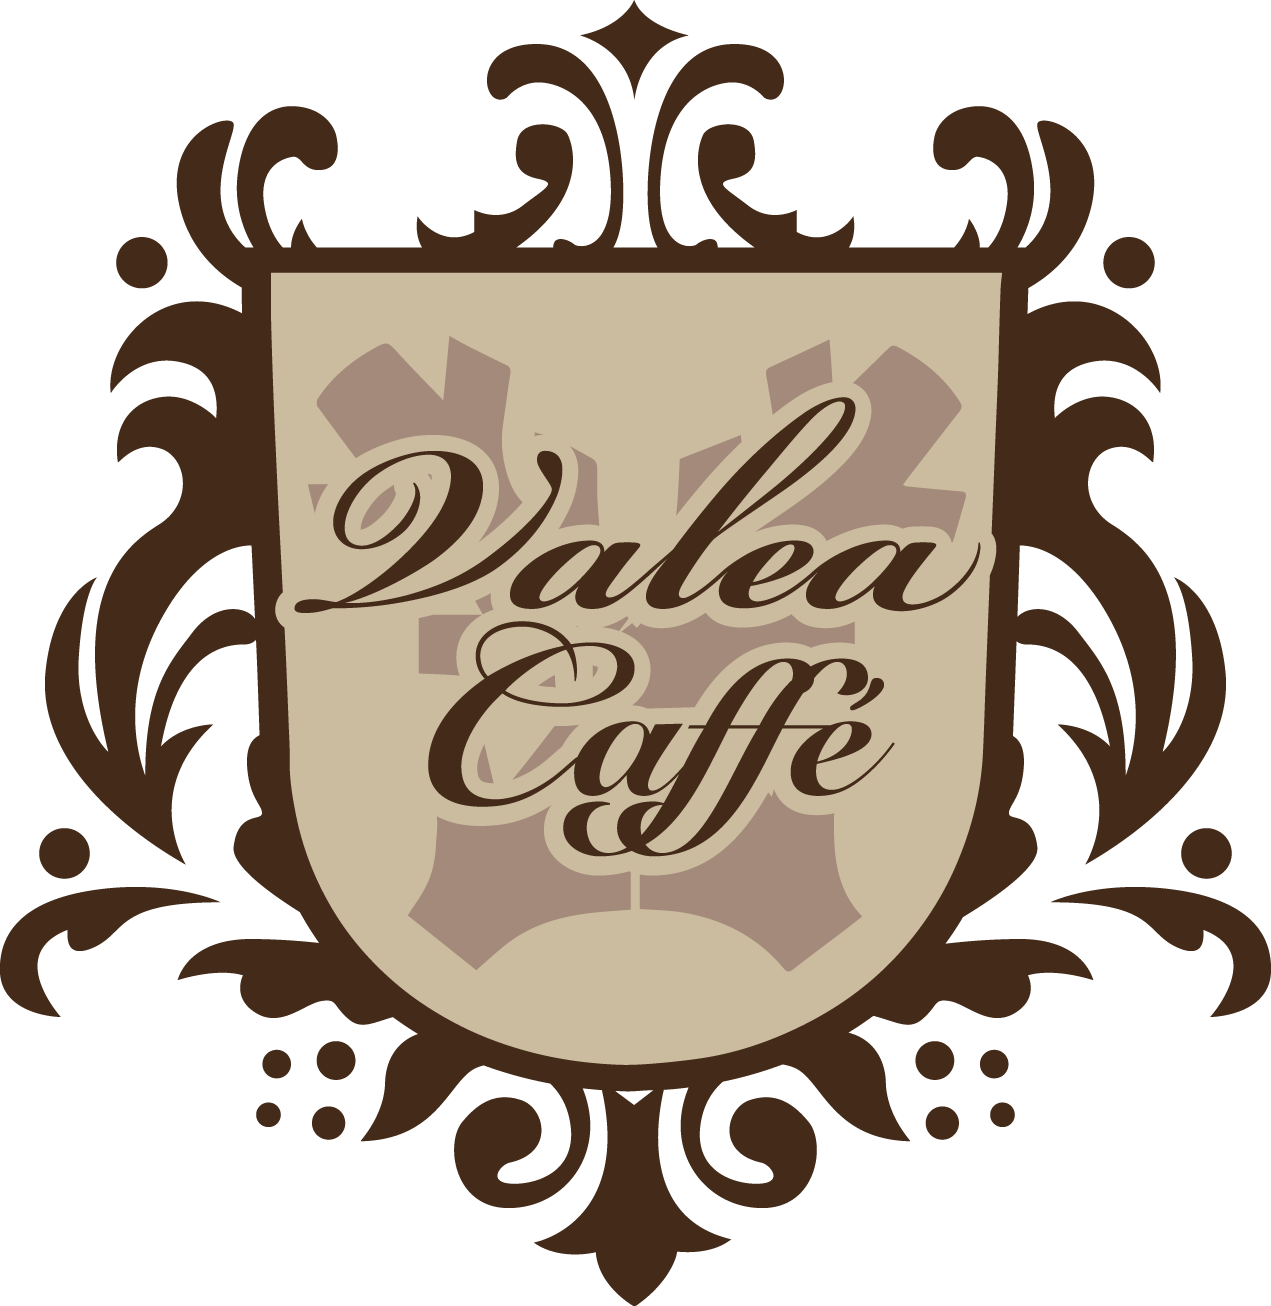 Valea Caffe logo